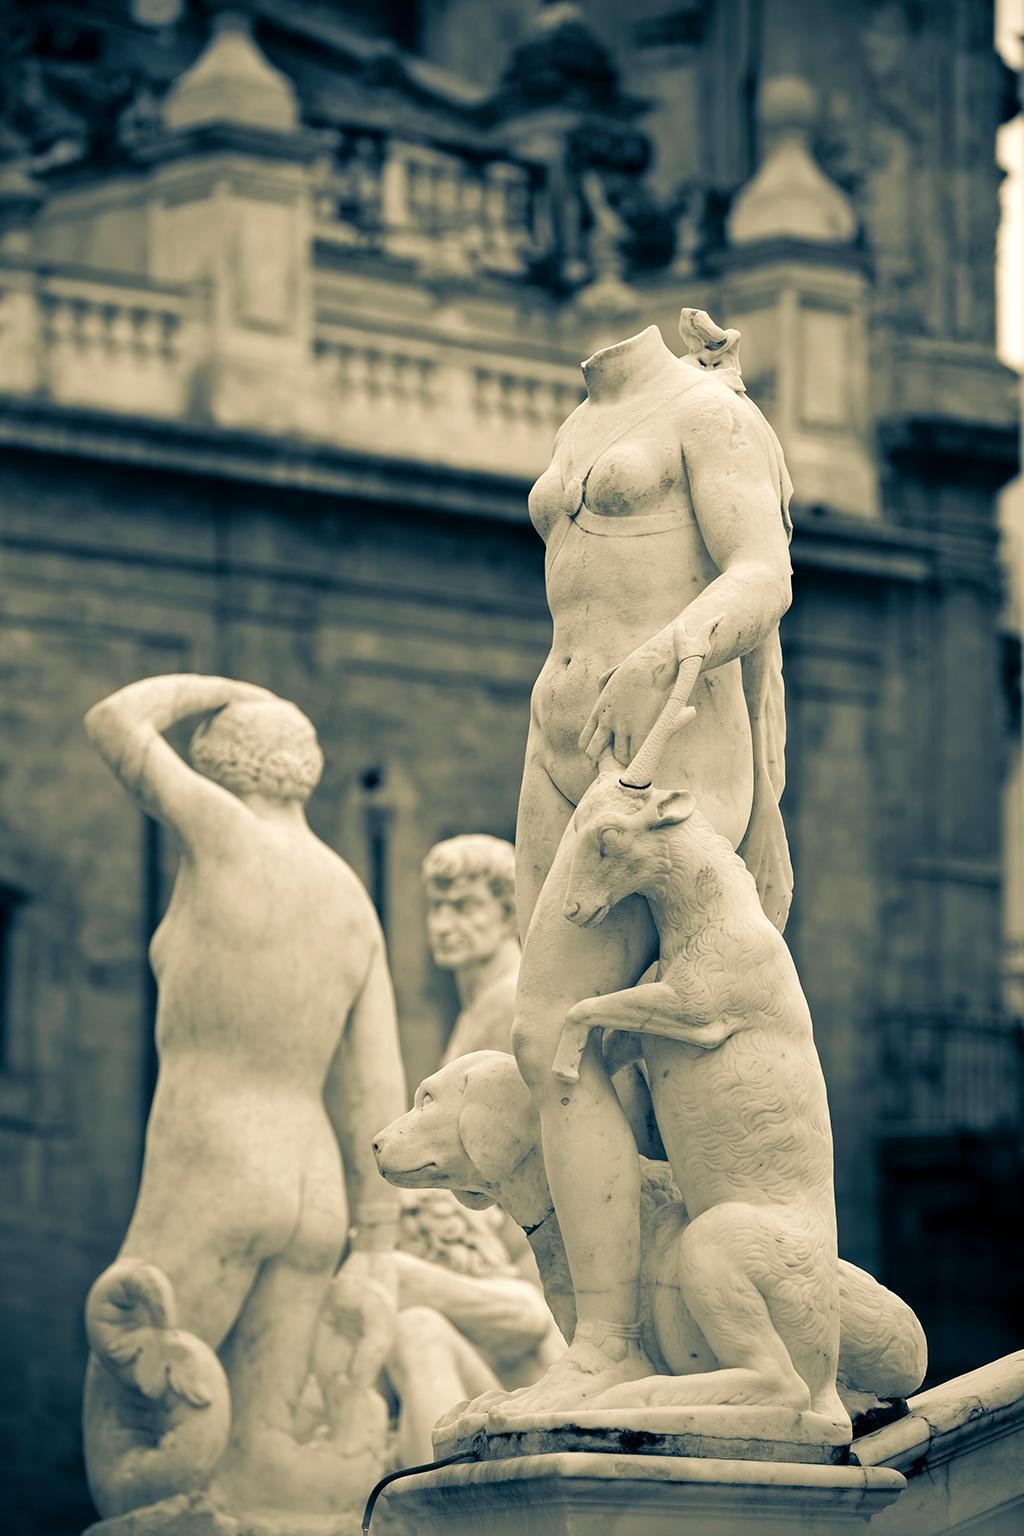  Cosmo Condina Landscape Photograph -  “Fountain of Shame” Marble Fountain Statues, Palermo, Sicily, 2017